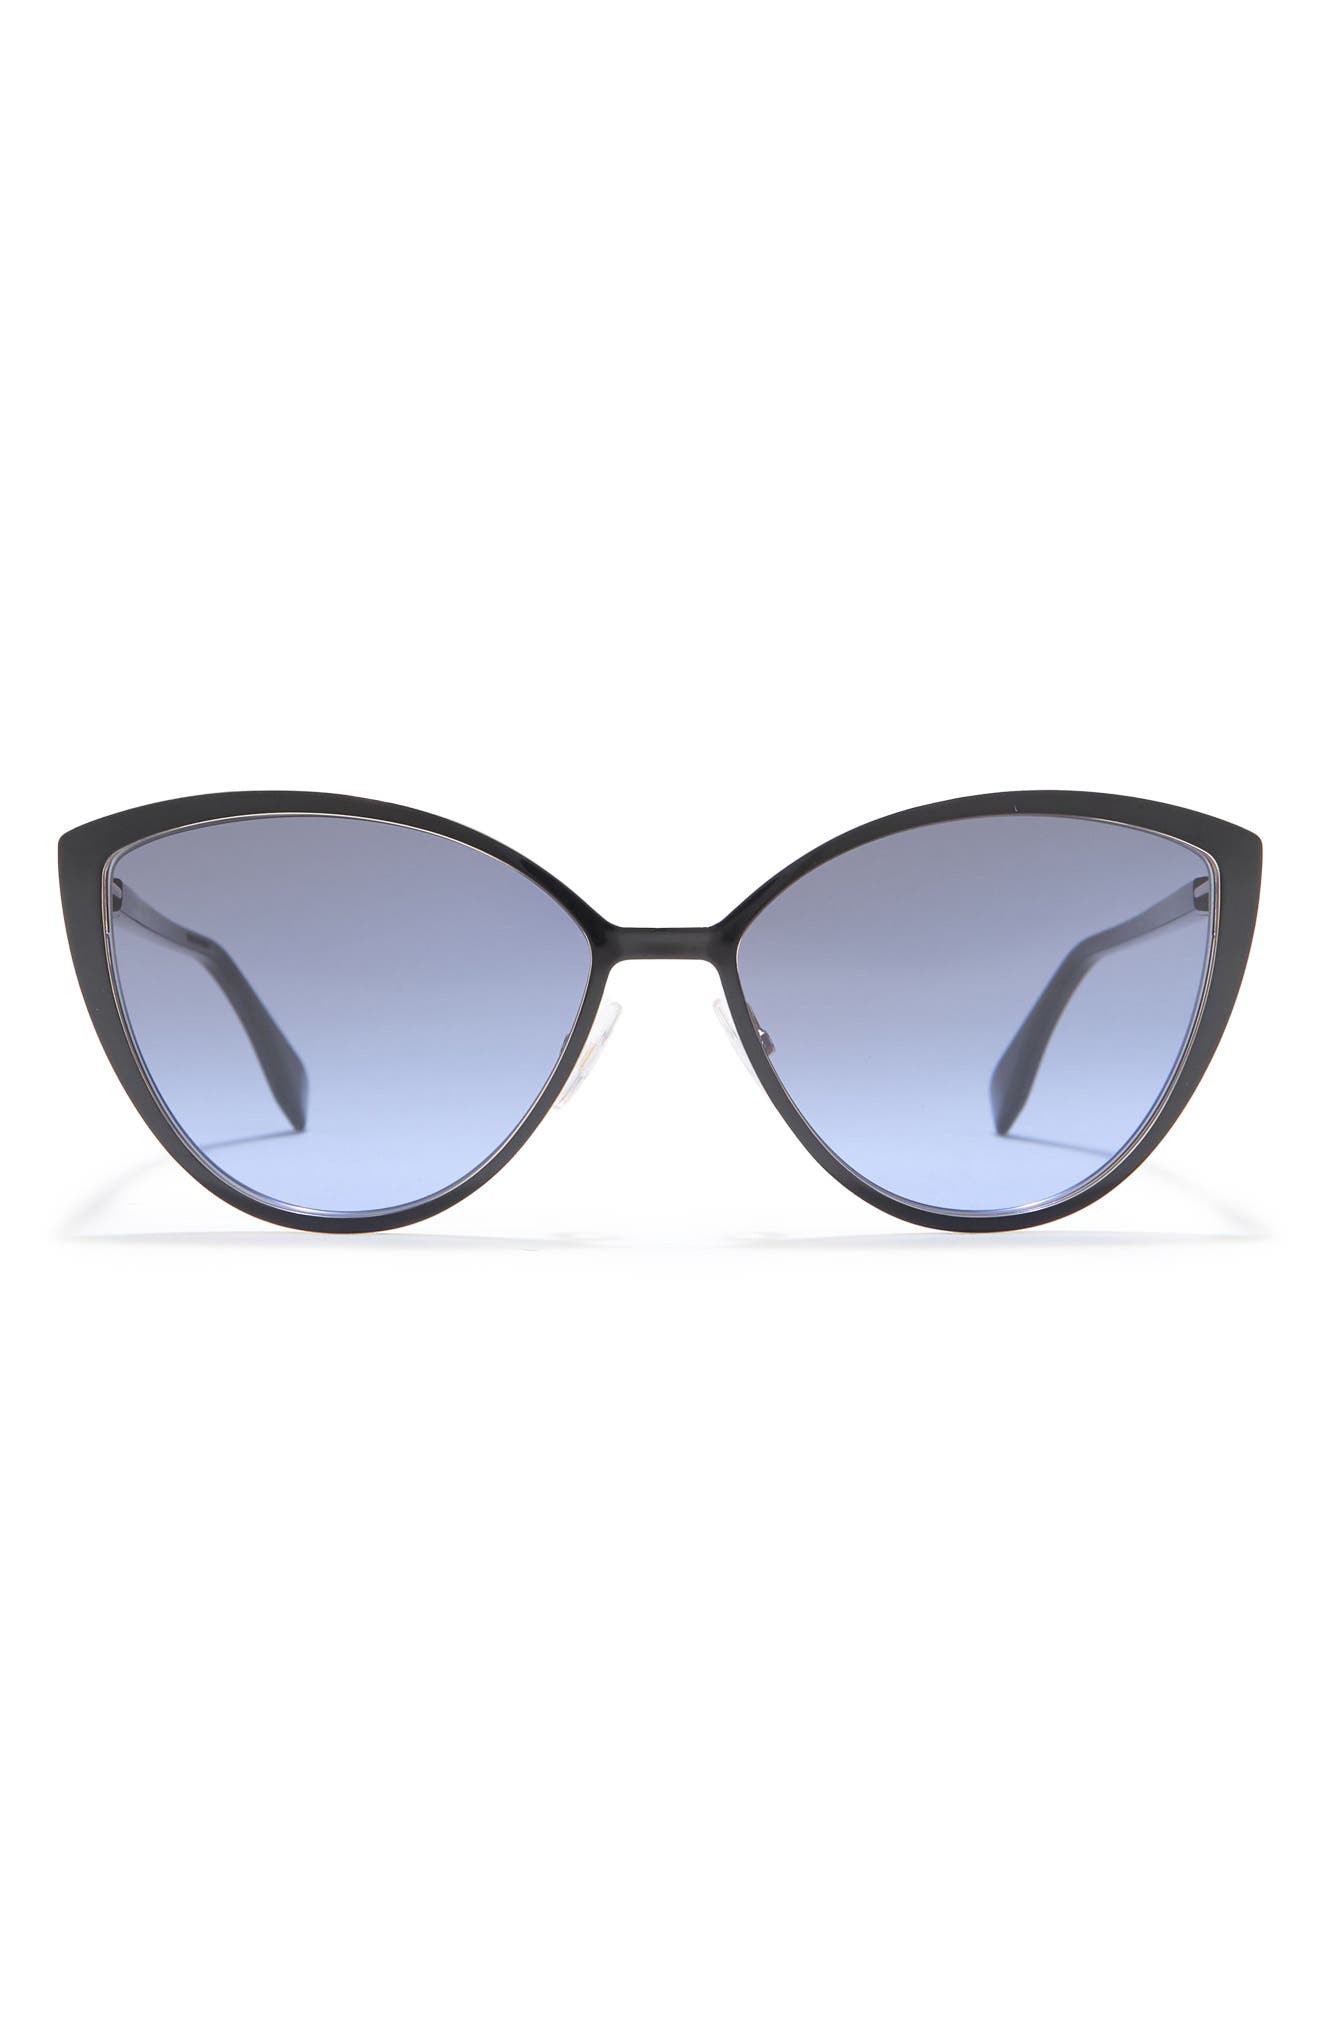 Fendi 60mm Gradient Cat Eye Sunglasses in Black/Gold/Grey Azure at Nordstrom